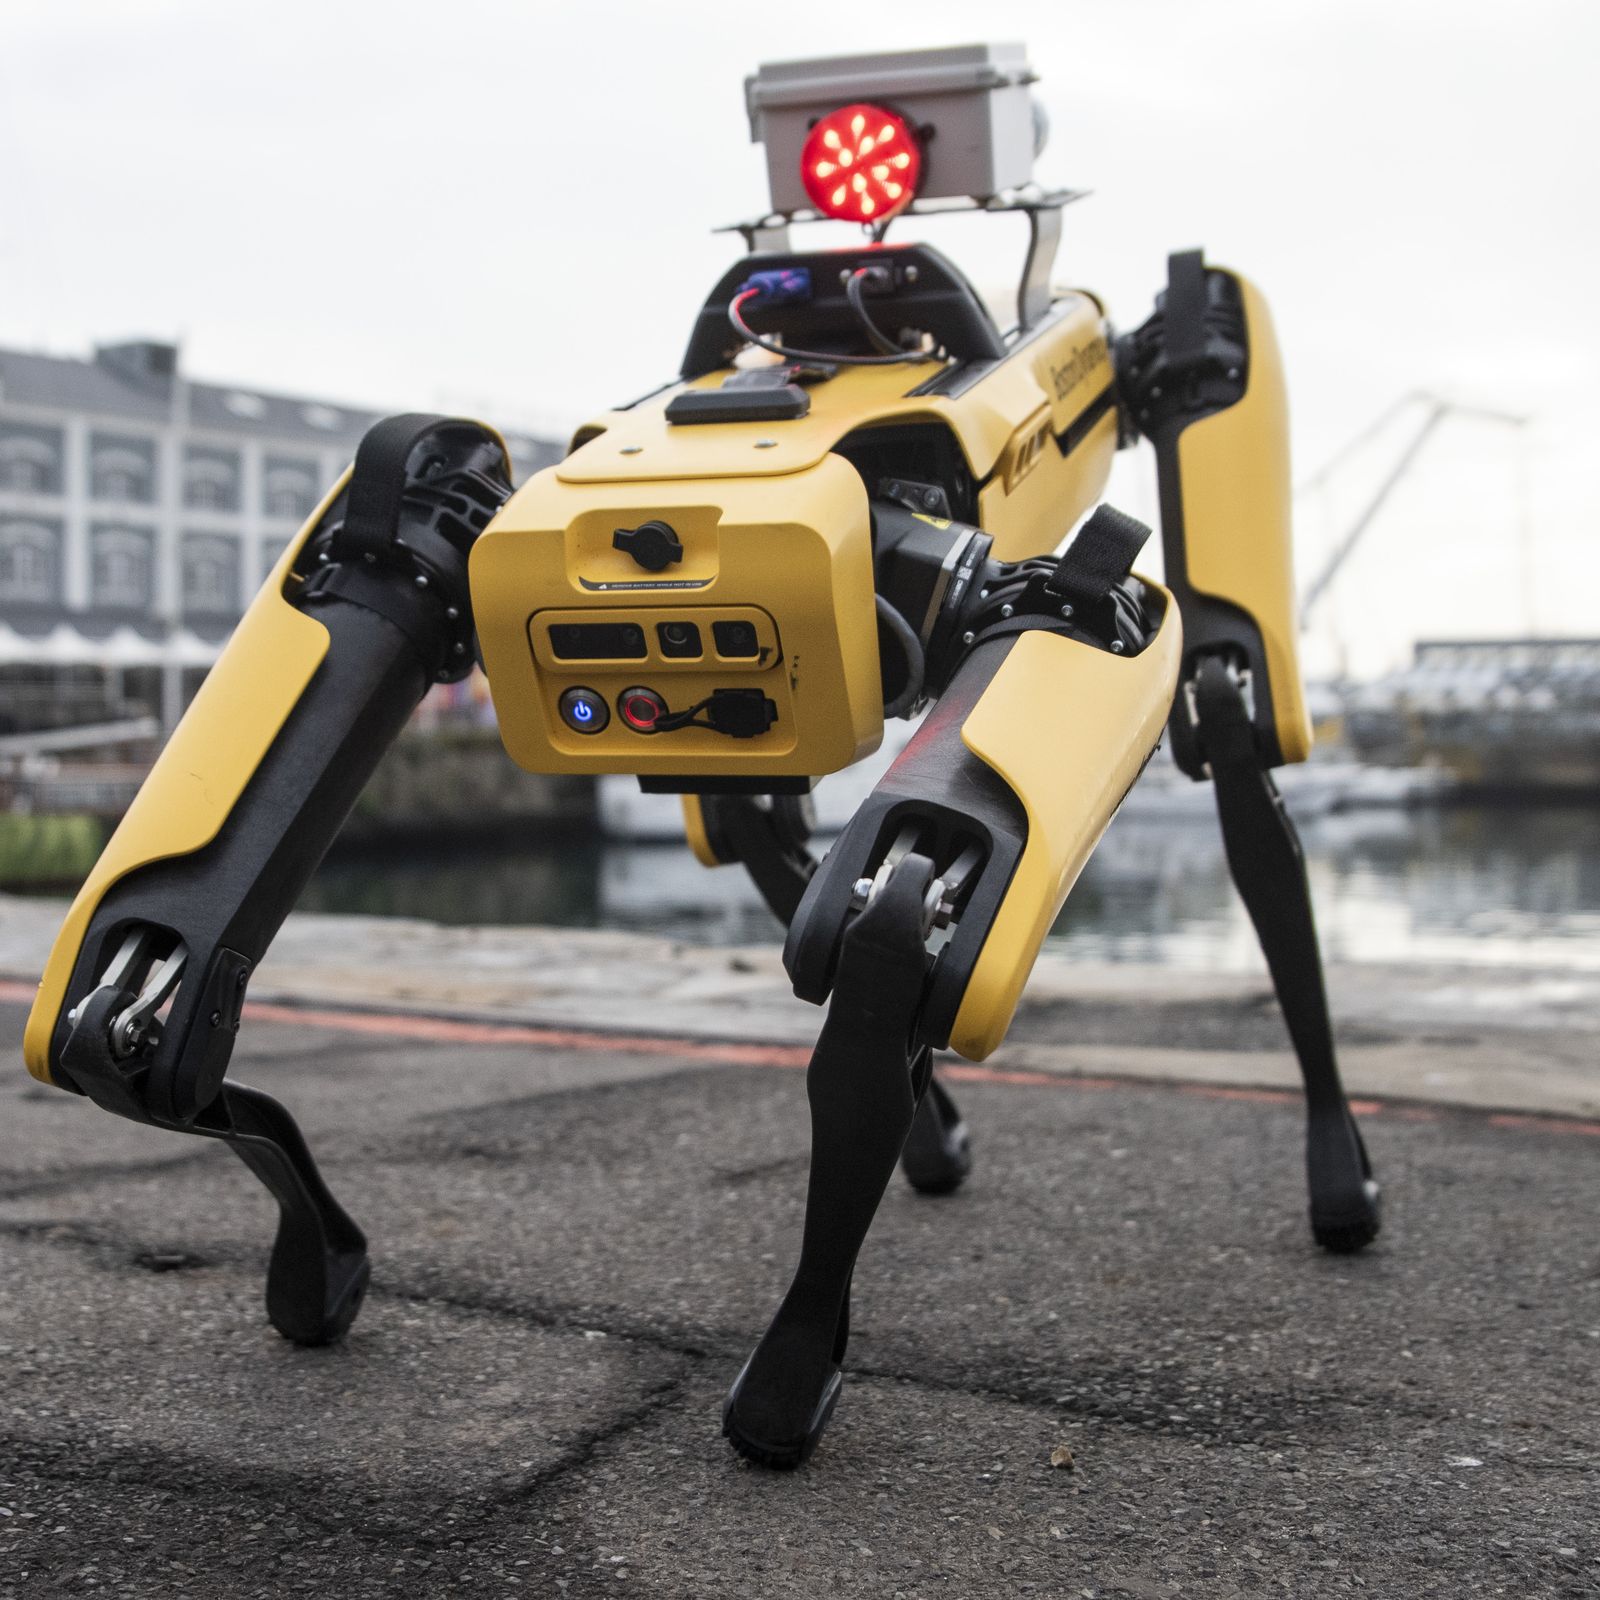 Boston pledges not to weaponize its robots